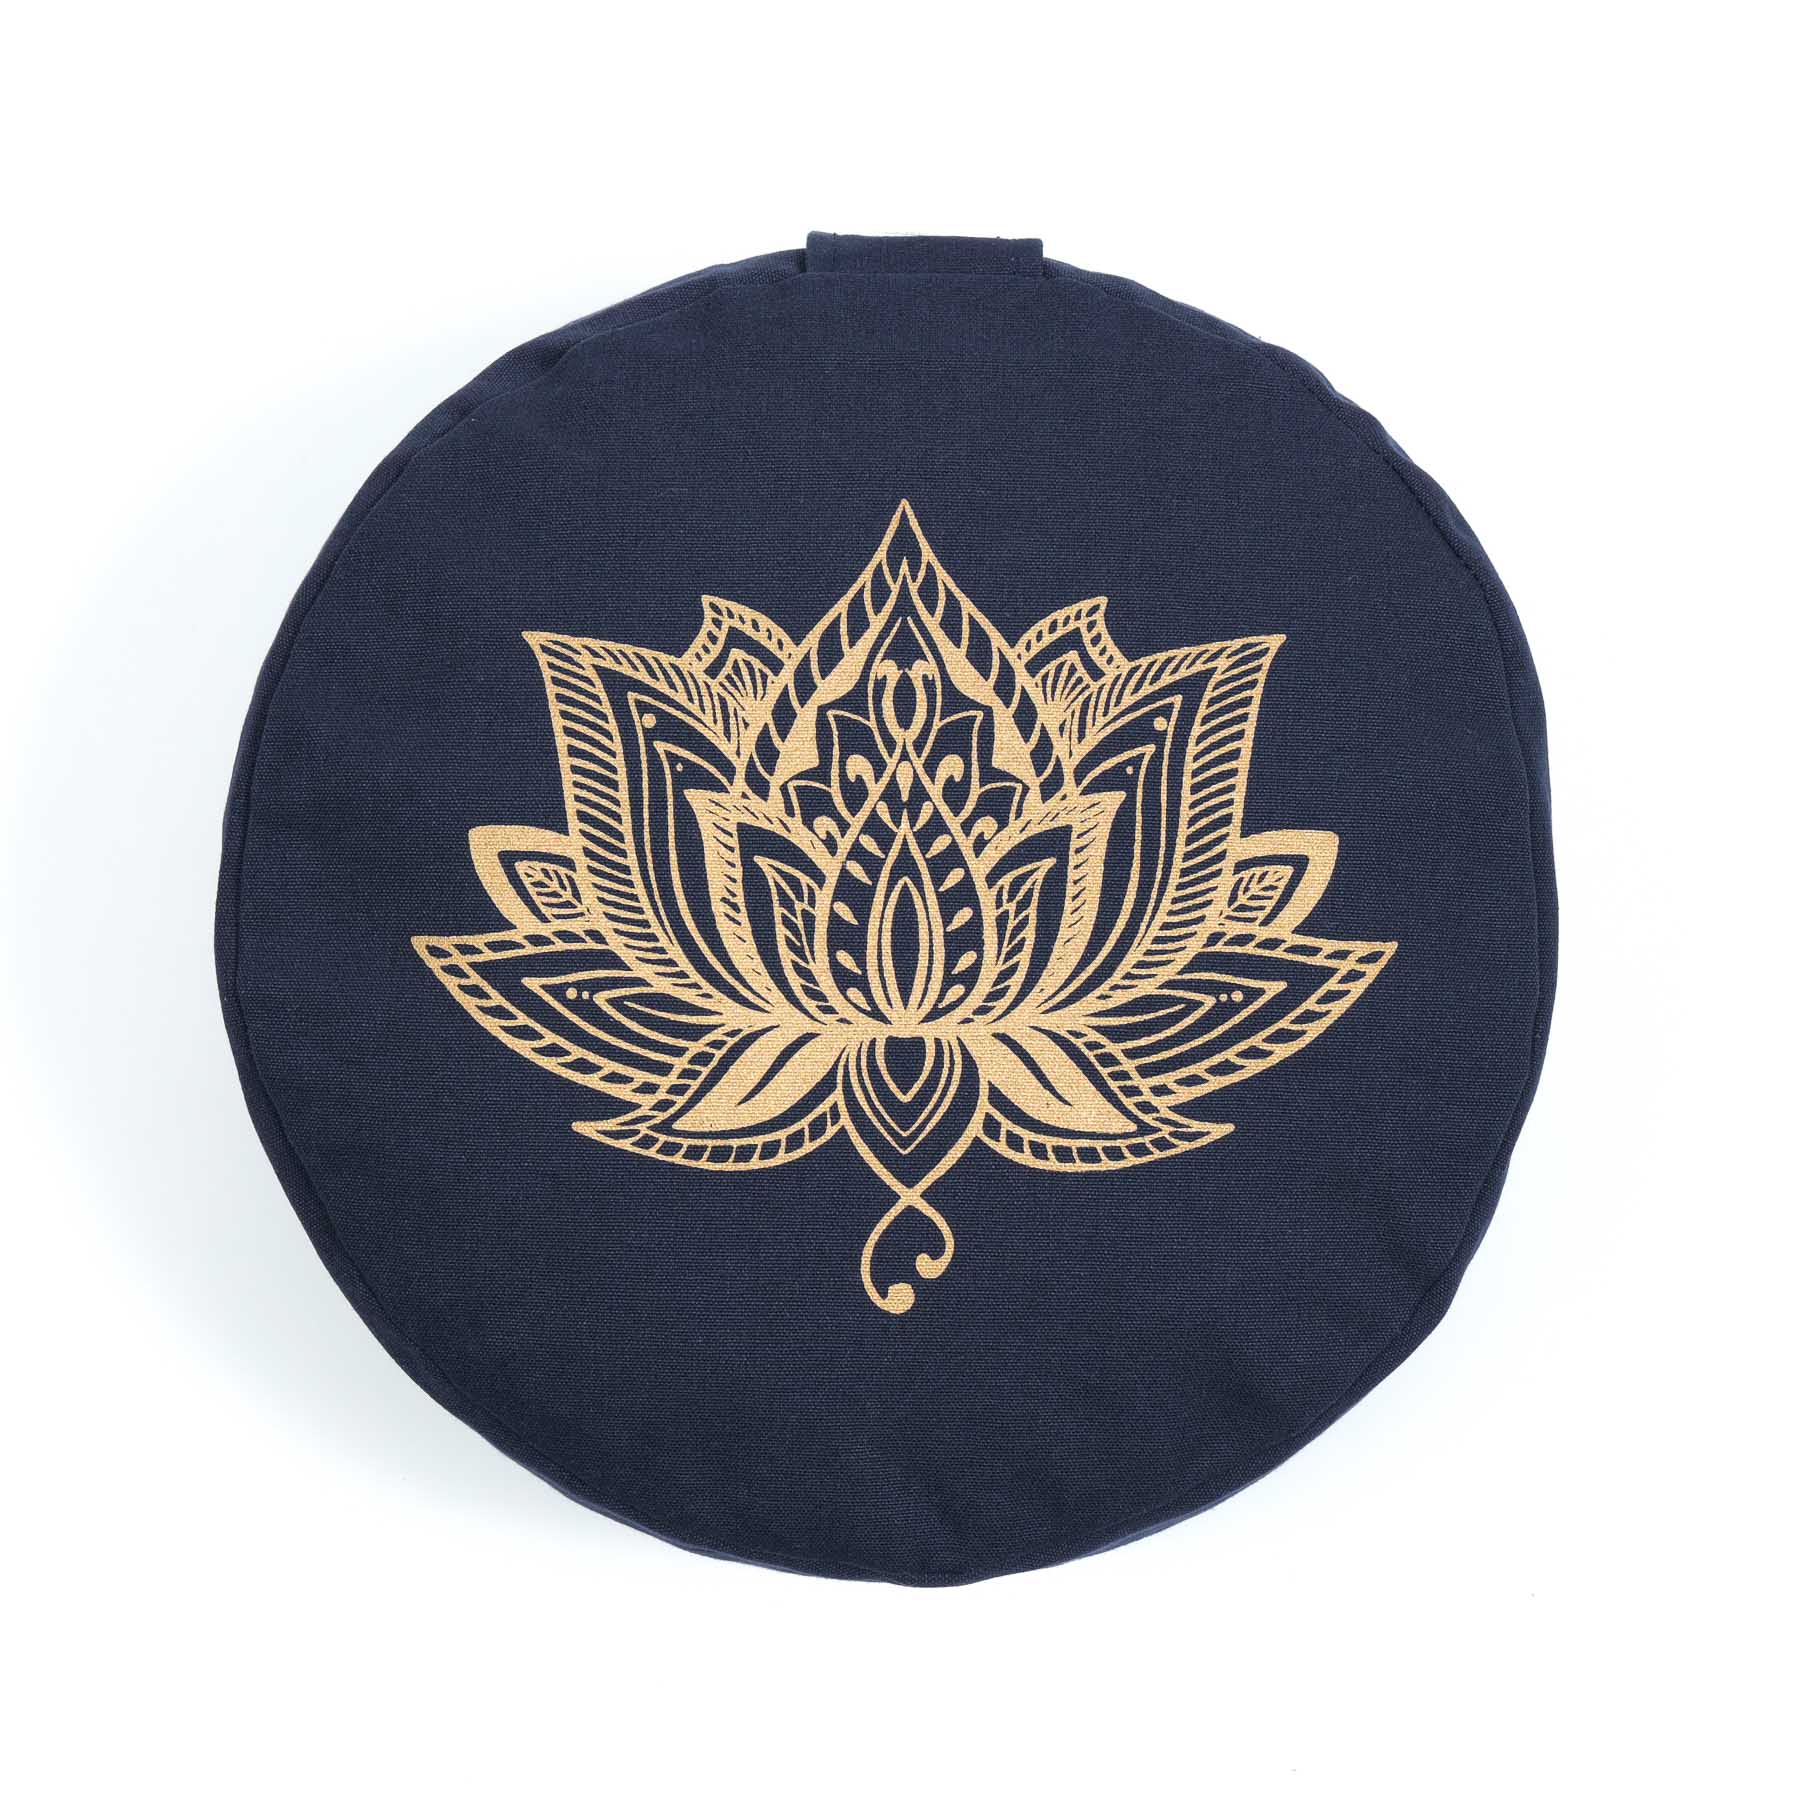 Coussin de méditation rond Lotus gold Print bleu marine